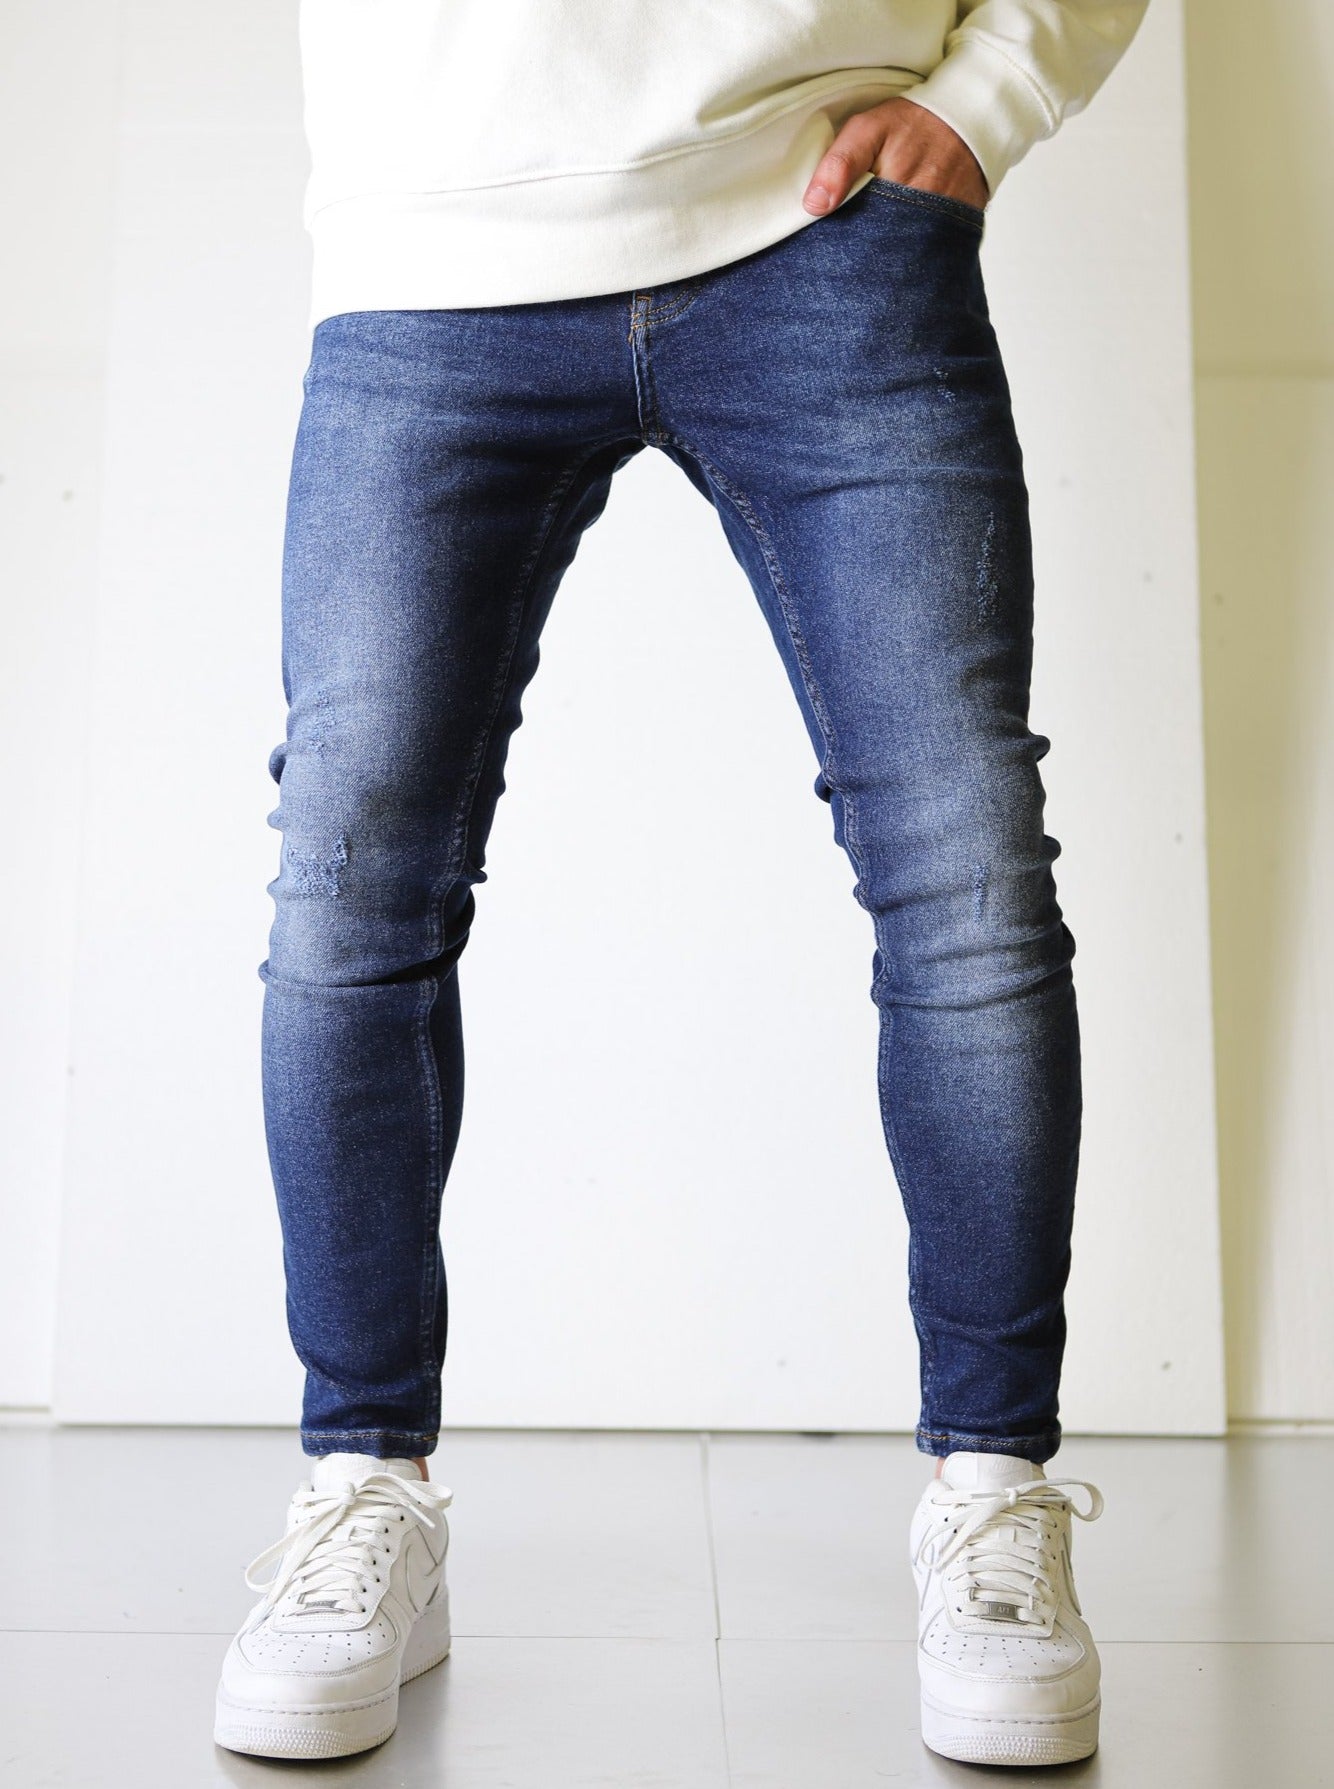 Basic Spray-On Blue Jeans - UNEFFECTED STUDIOS® - JEANS - UNEFFECTED